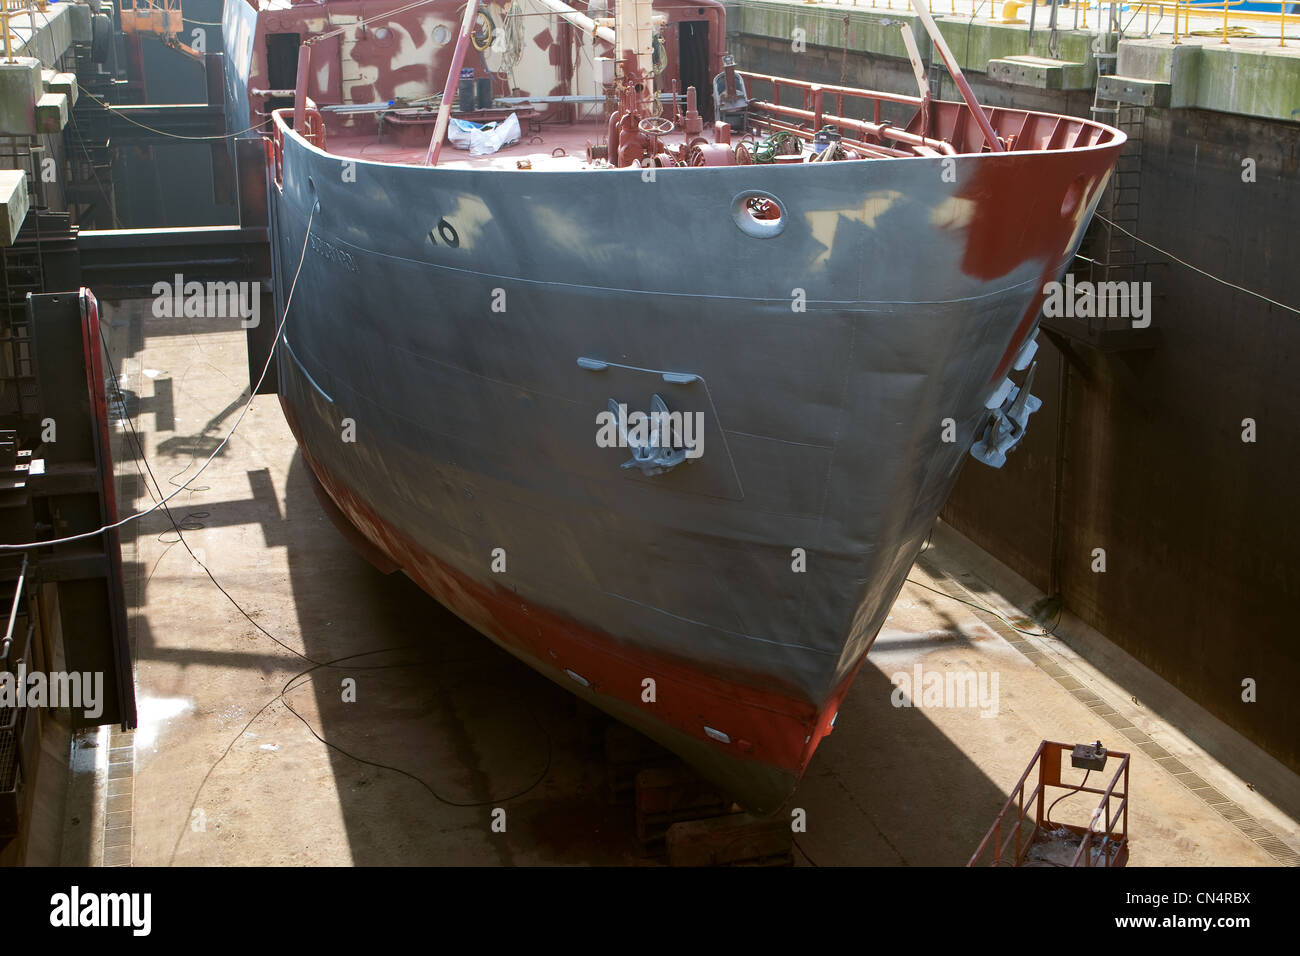 Fishing trawler in shipyard drydock facilities for repairs, maintenance and painting. Fraserburgh ship repair yards. Scotland Uk Stock Photo